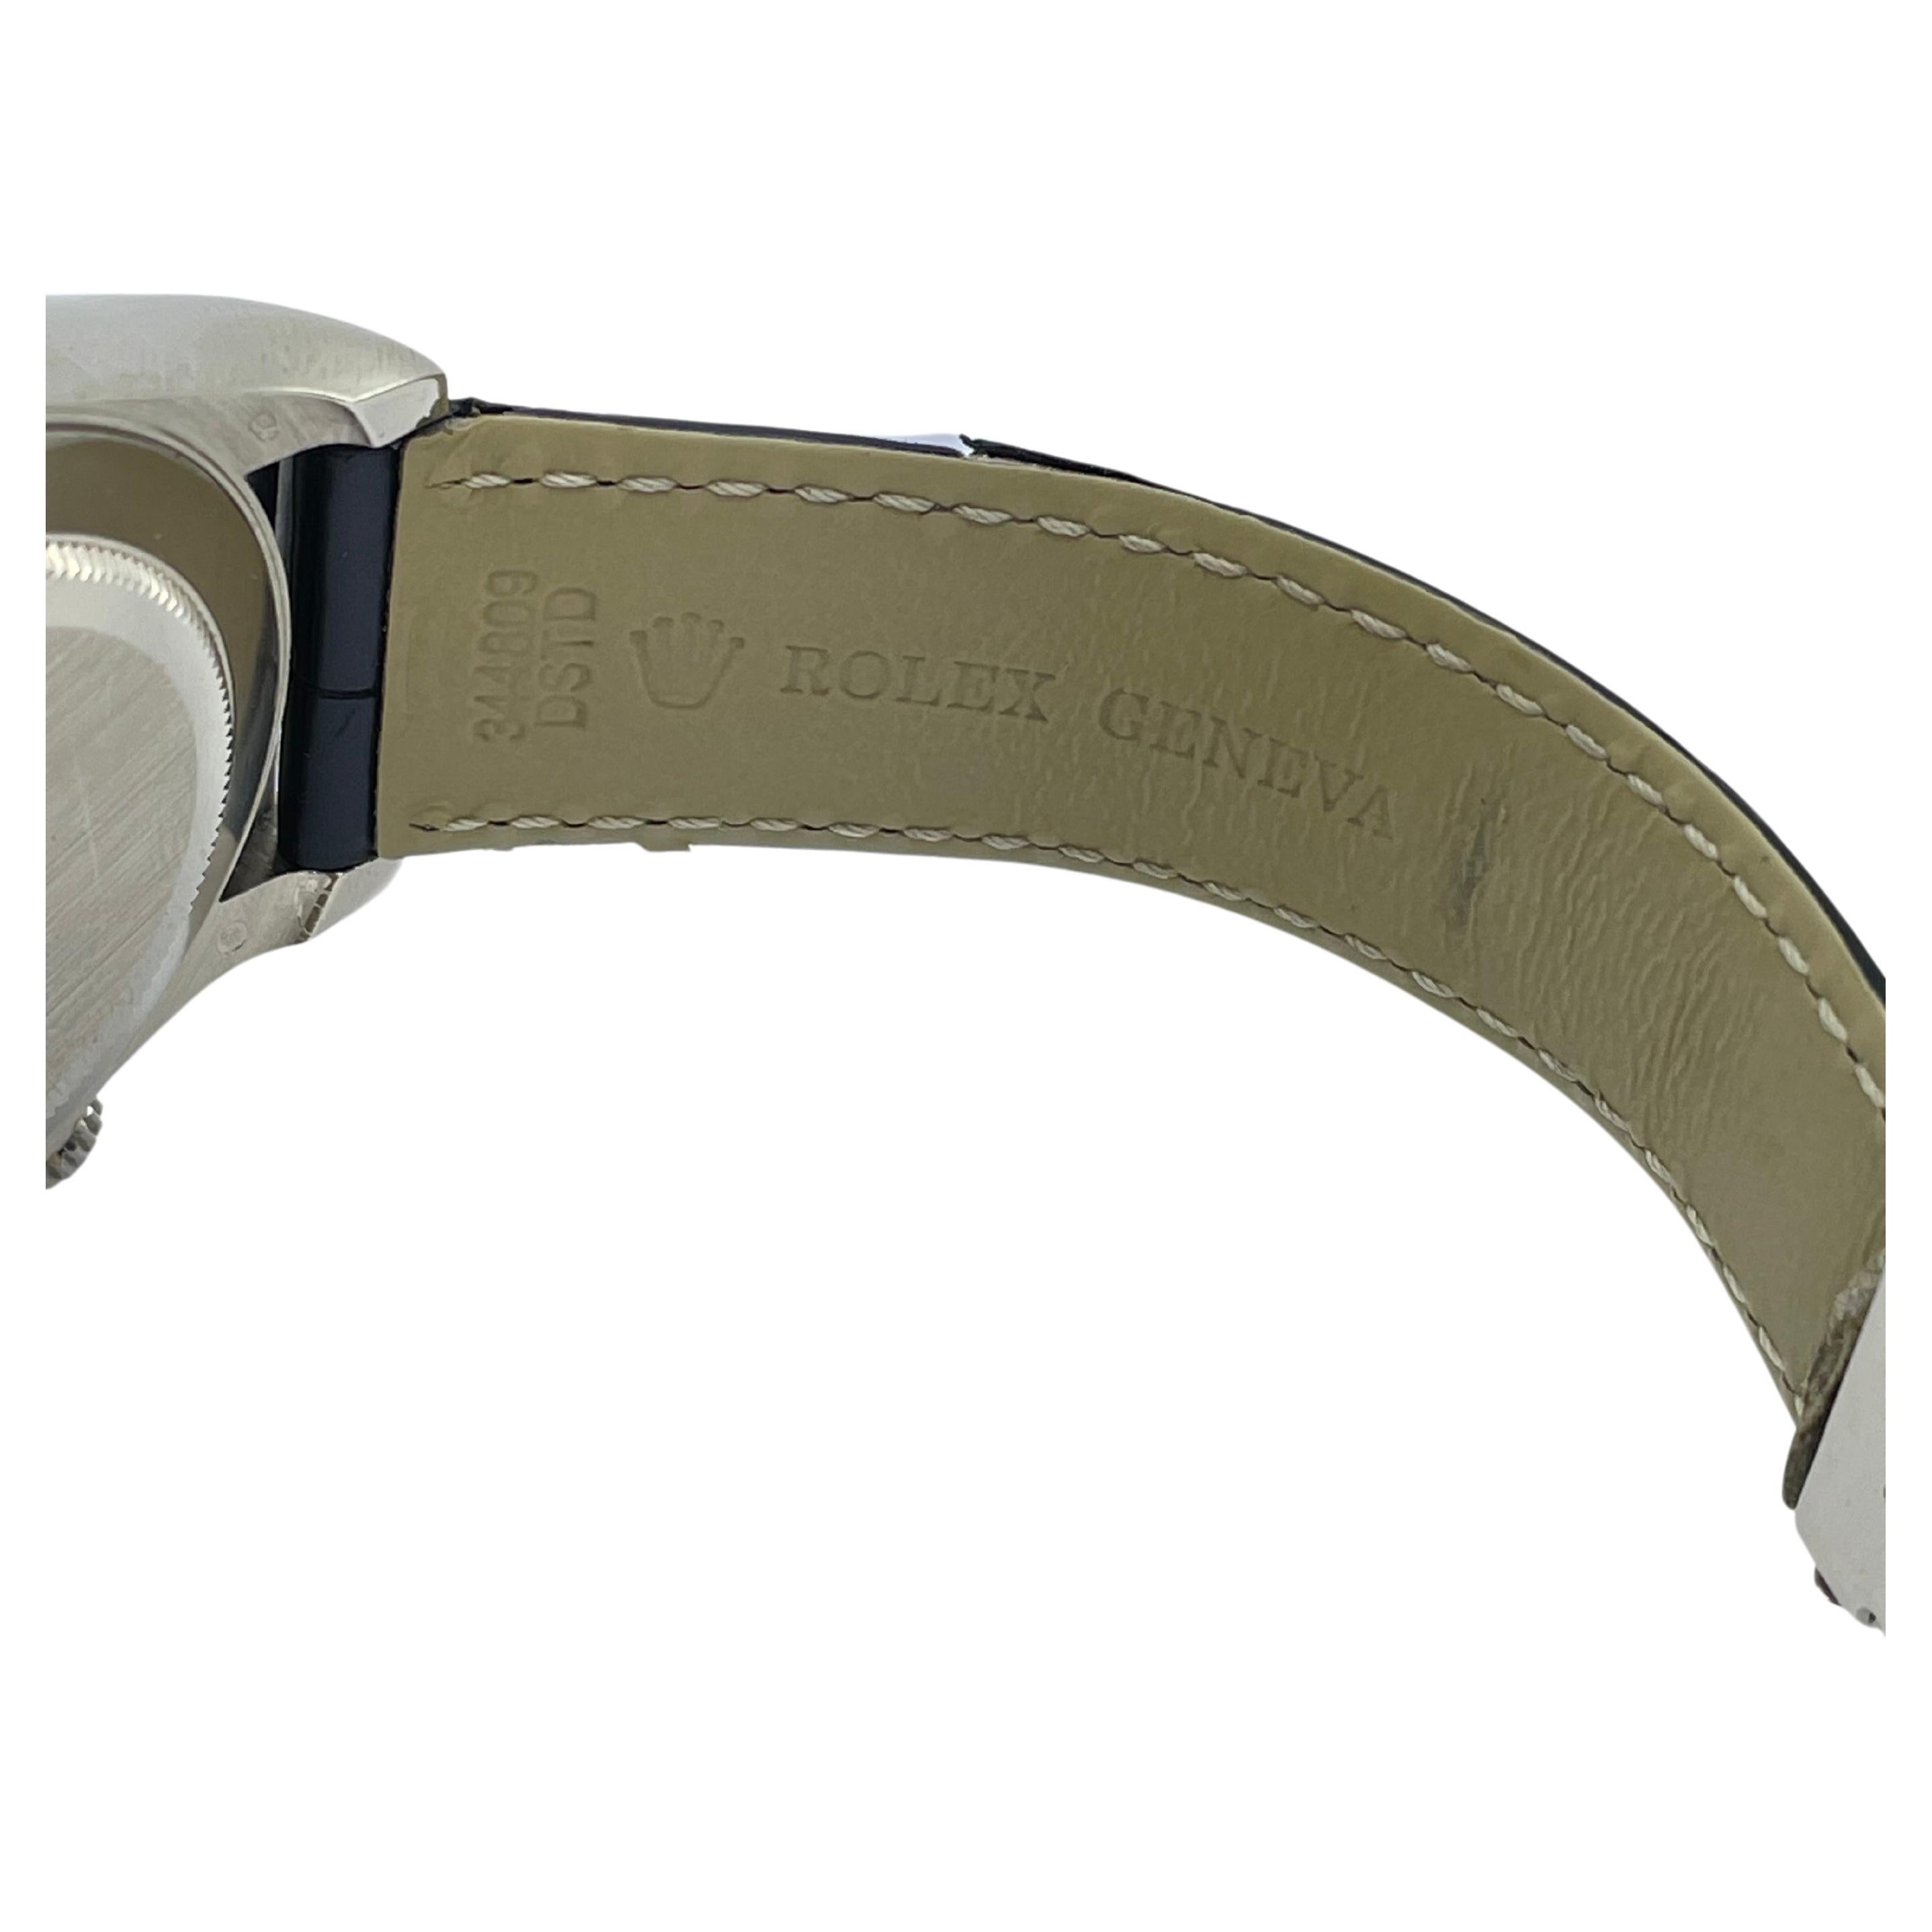 Rolex Daytona Cosmograph whitegold diamond dial Ref:116519 For Sale 1